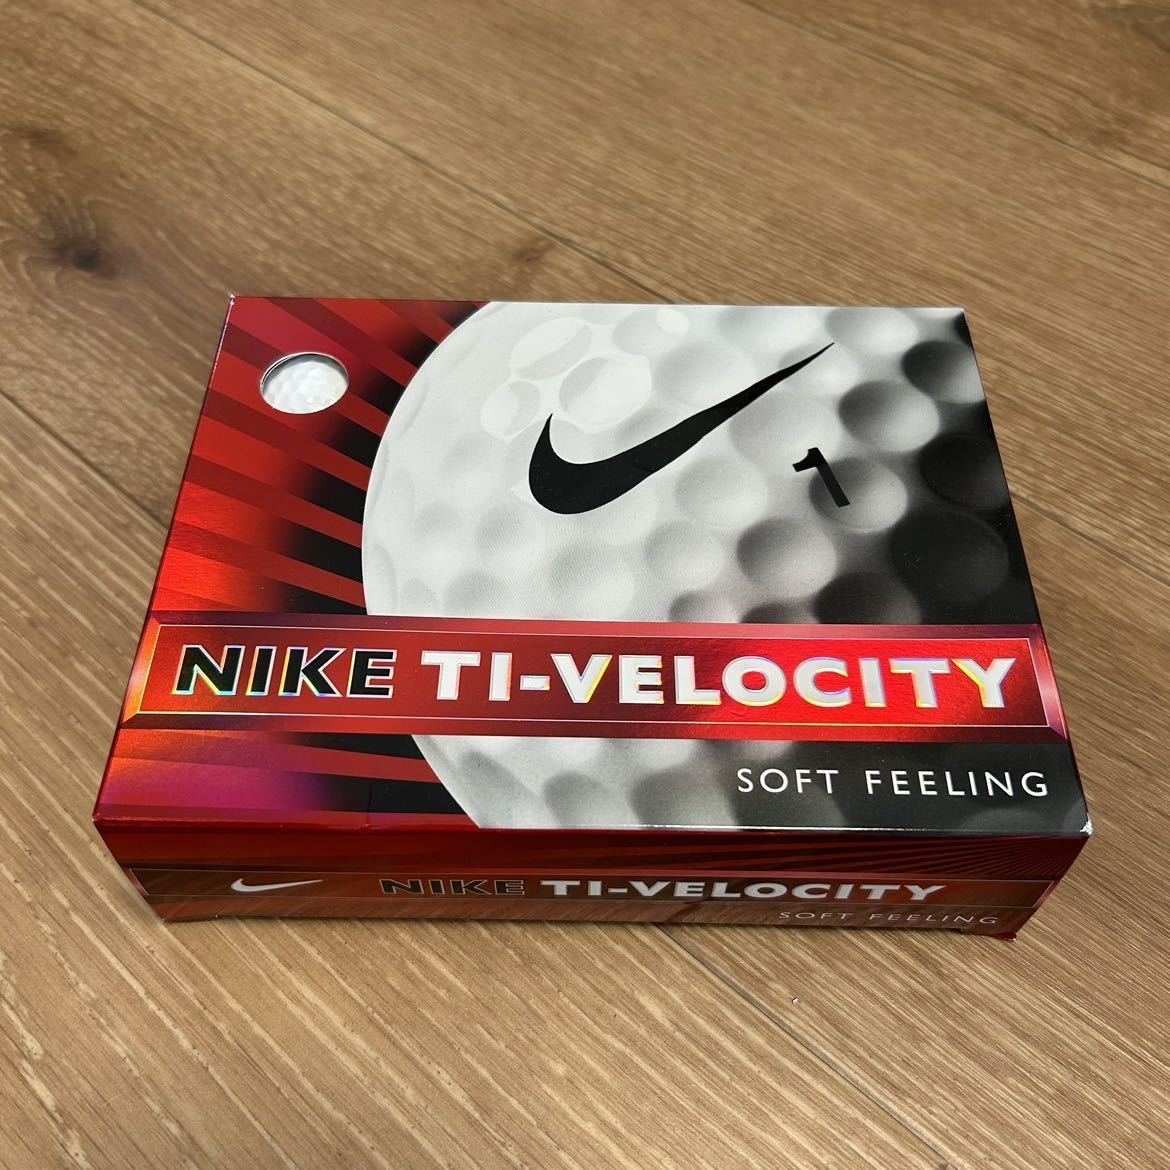 6-60 NIKE ナイキ ゴルフボール TI-VELOCITY SOFT FEELING 12個セット 未使用品